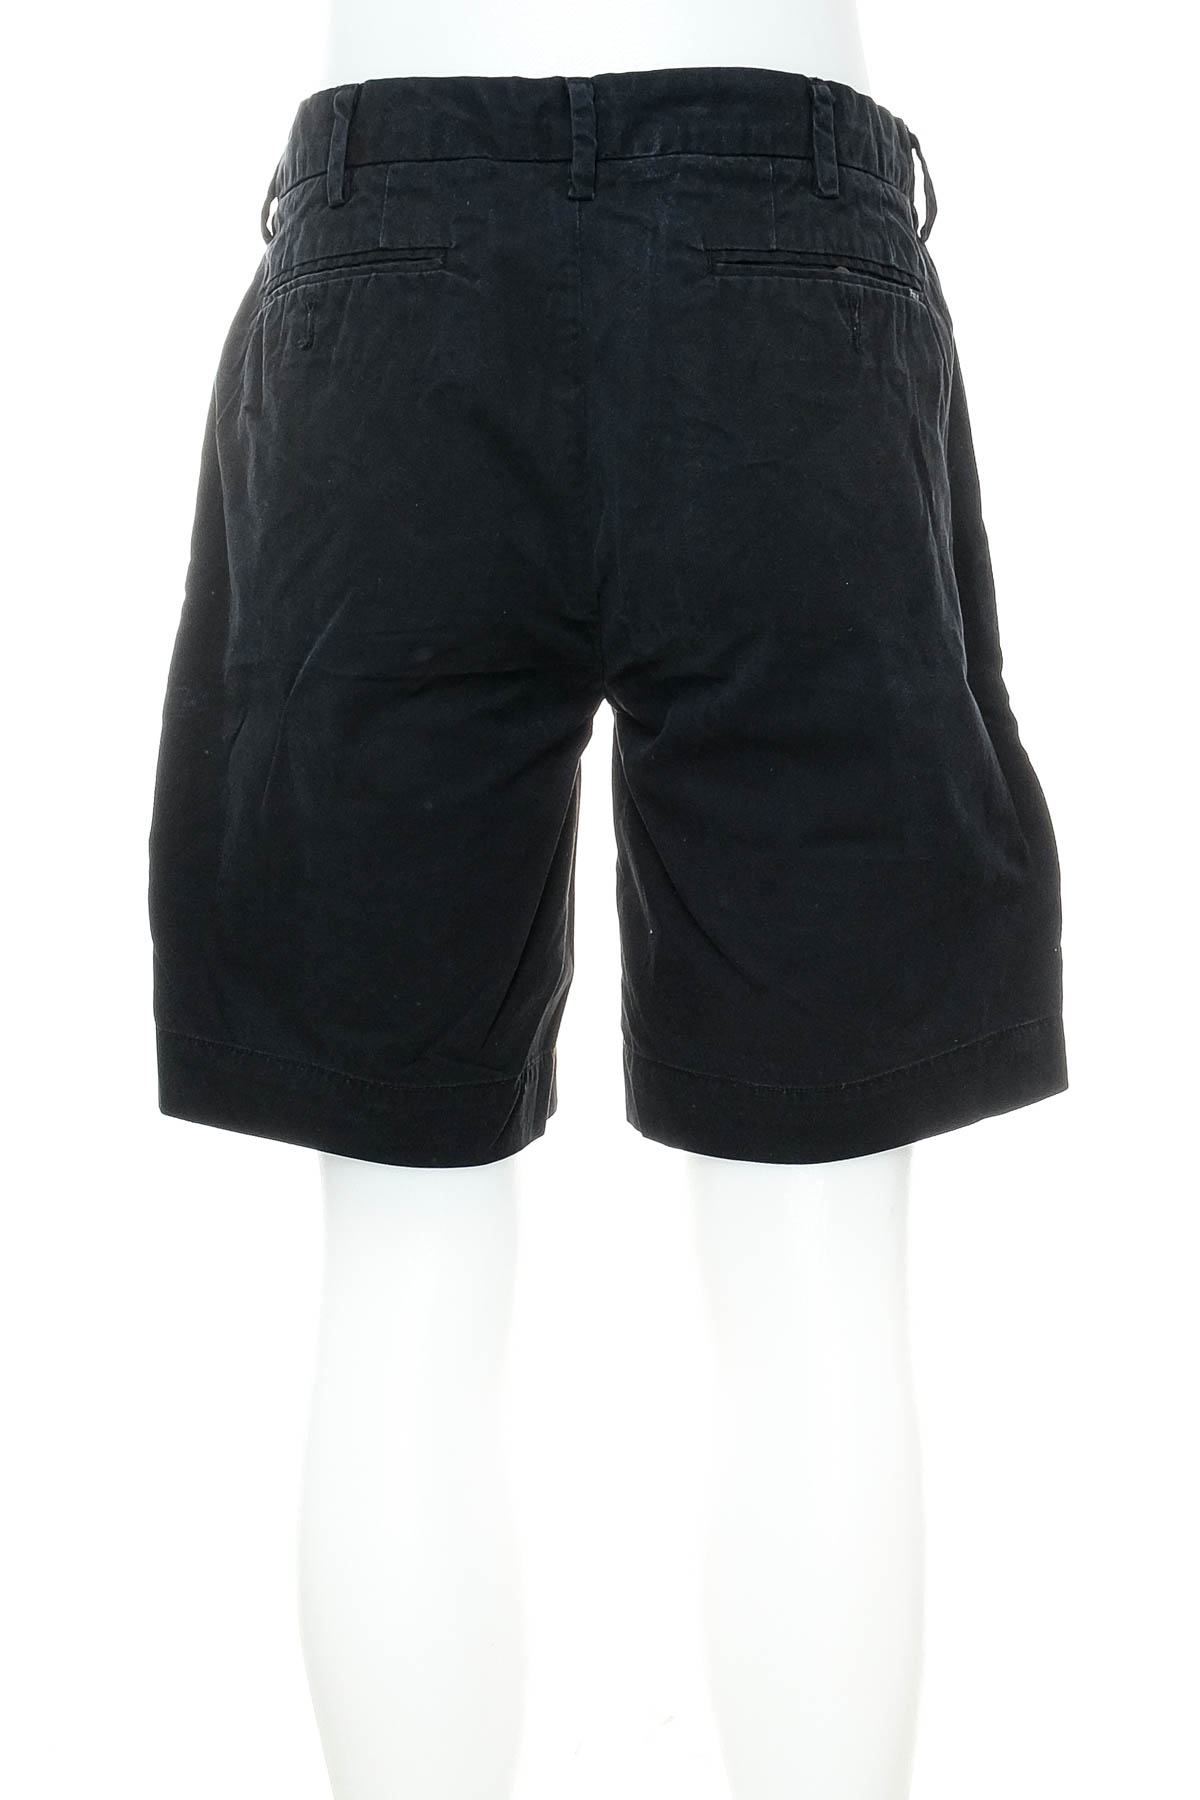 Men's shorts - POLO RALPH LAUREN - 1